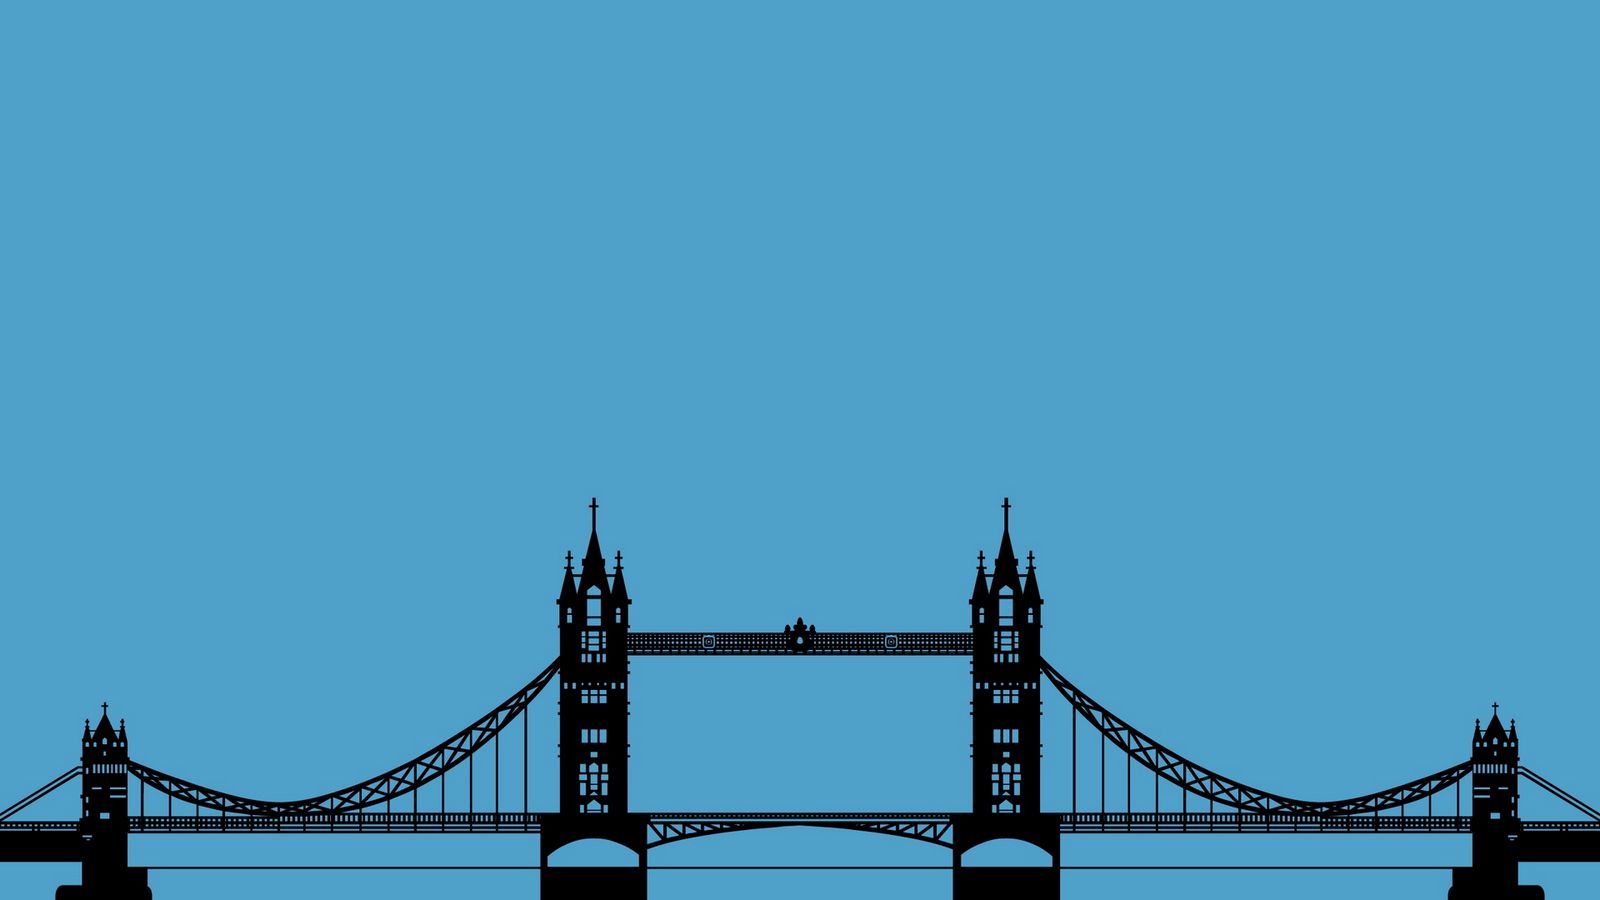 Download wallpaper 1600x900 bridge, london, graphics, minimalism widescreen 16:9 HD background